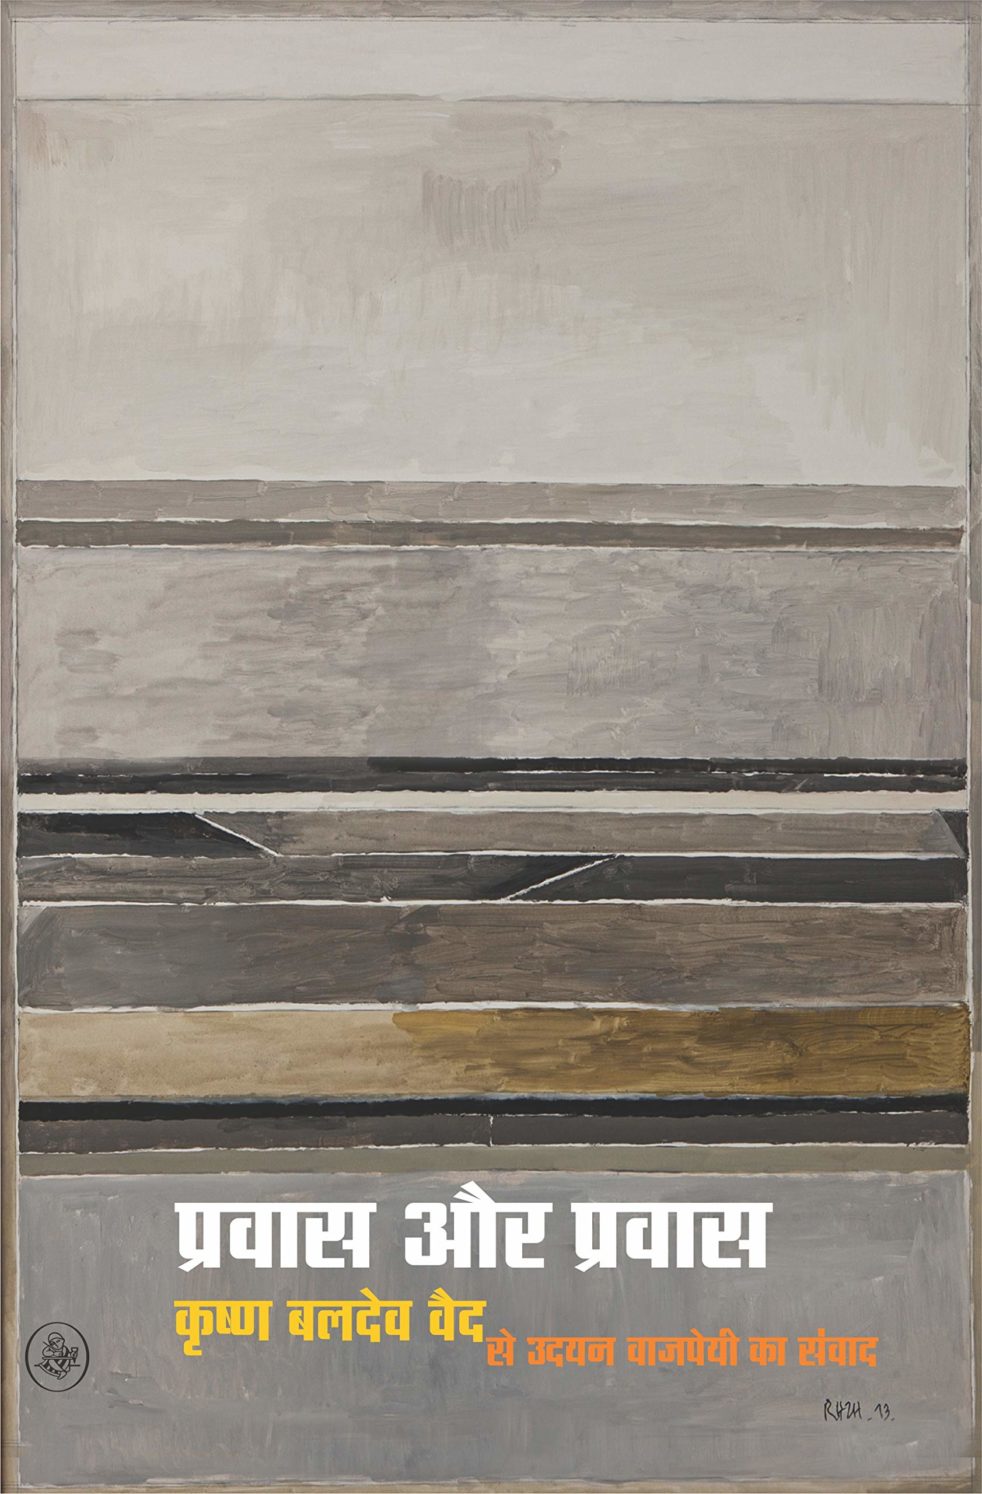 Cover image of Pravās aur Pravās (Exile and Exile) by the Hindi writer Krishna Baldev Vaid.